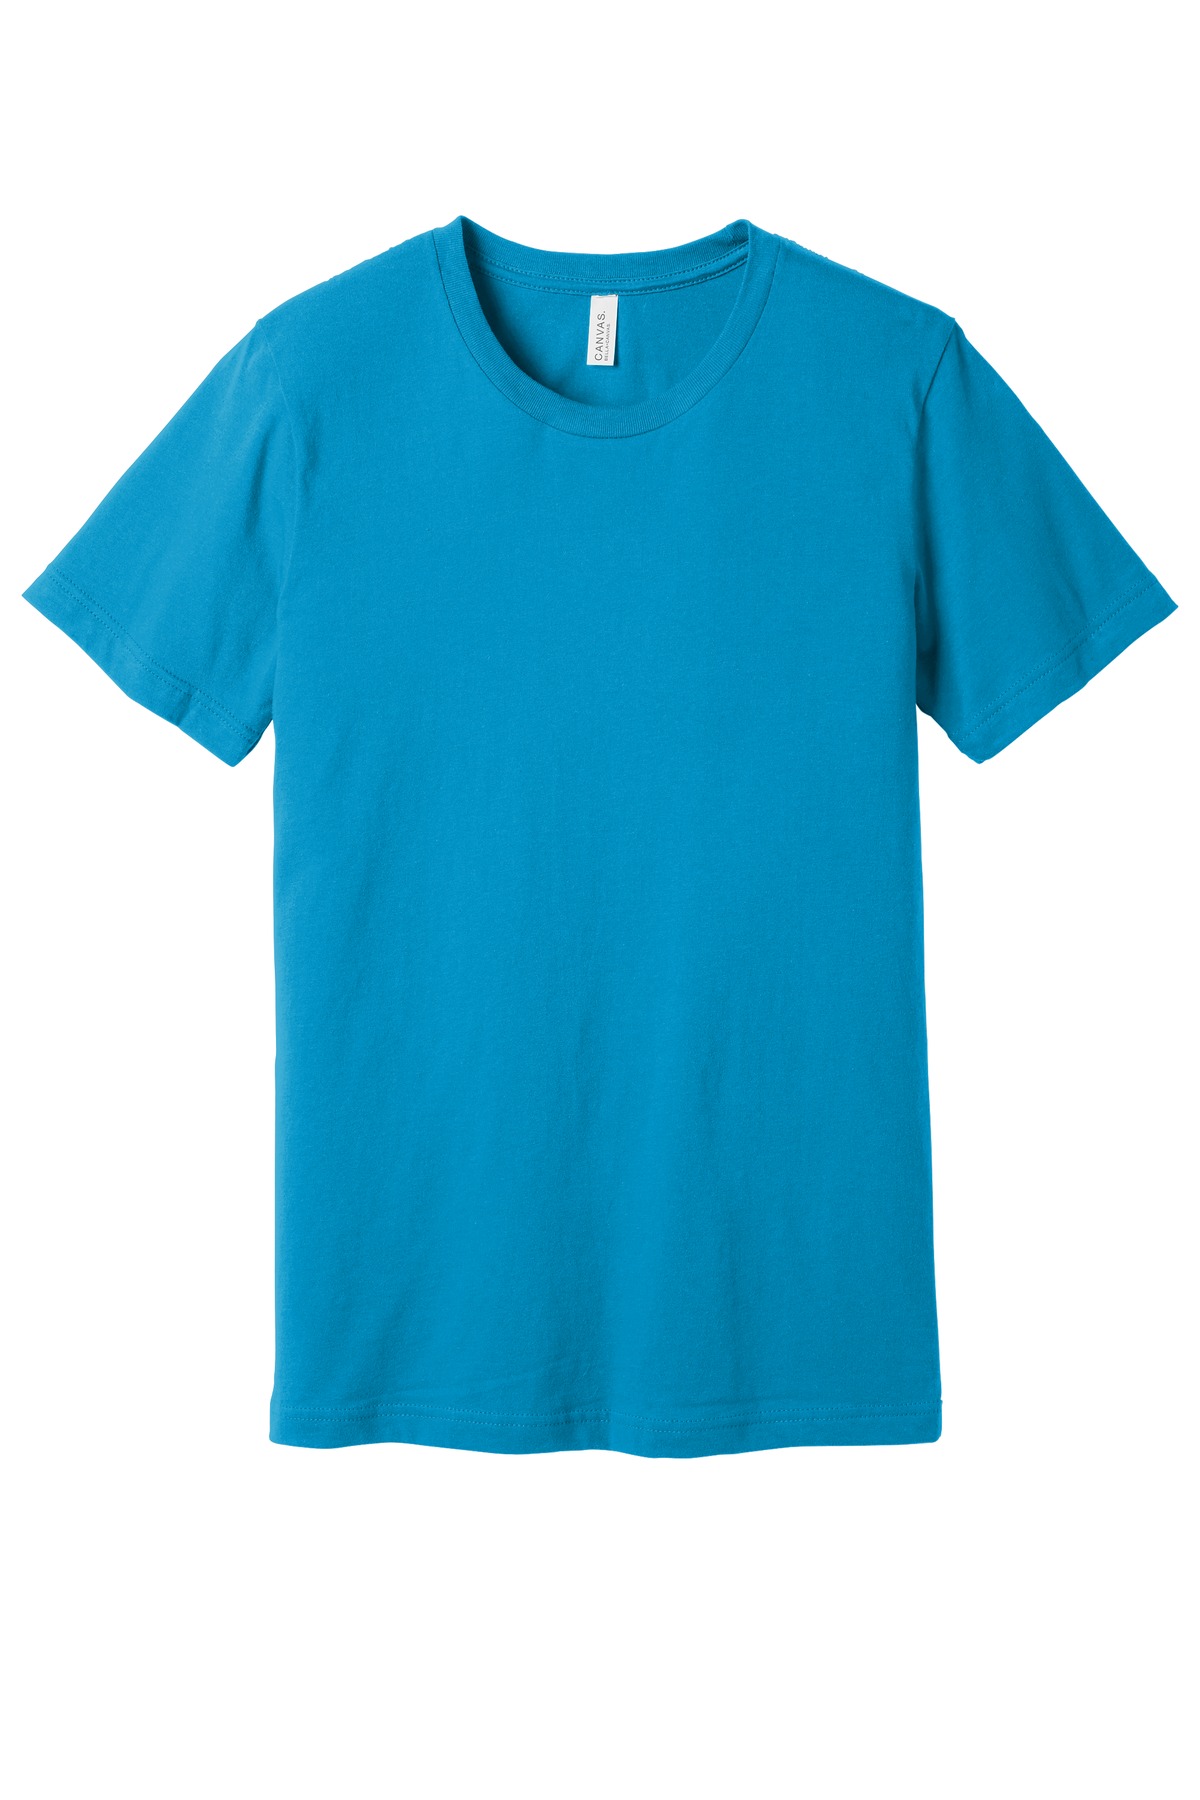 Bella + Canvas - Unisex Jersey Short-Sleeve T-Shirt-Military green-L